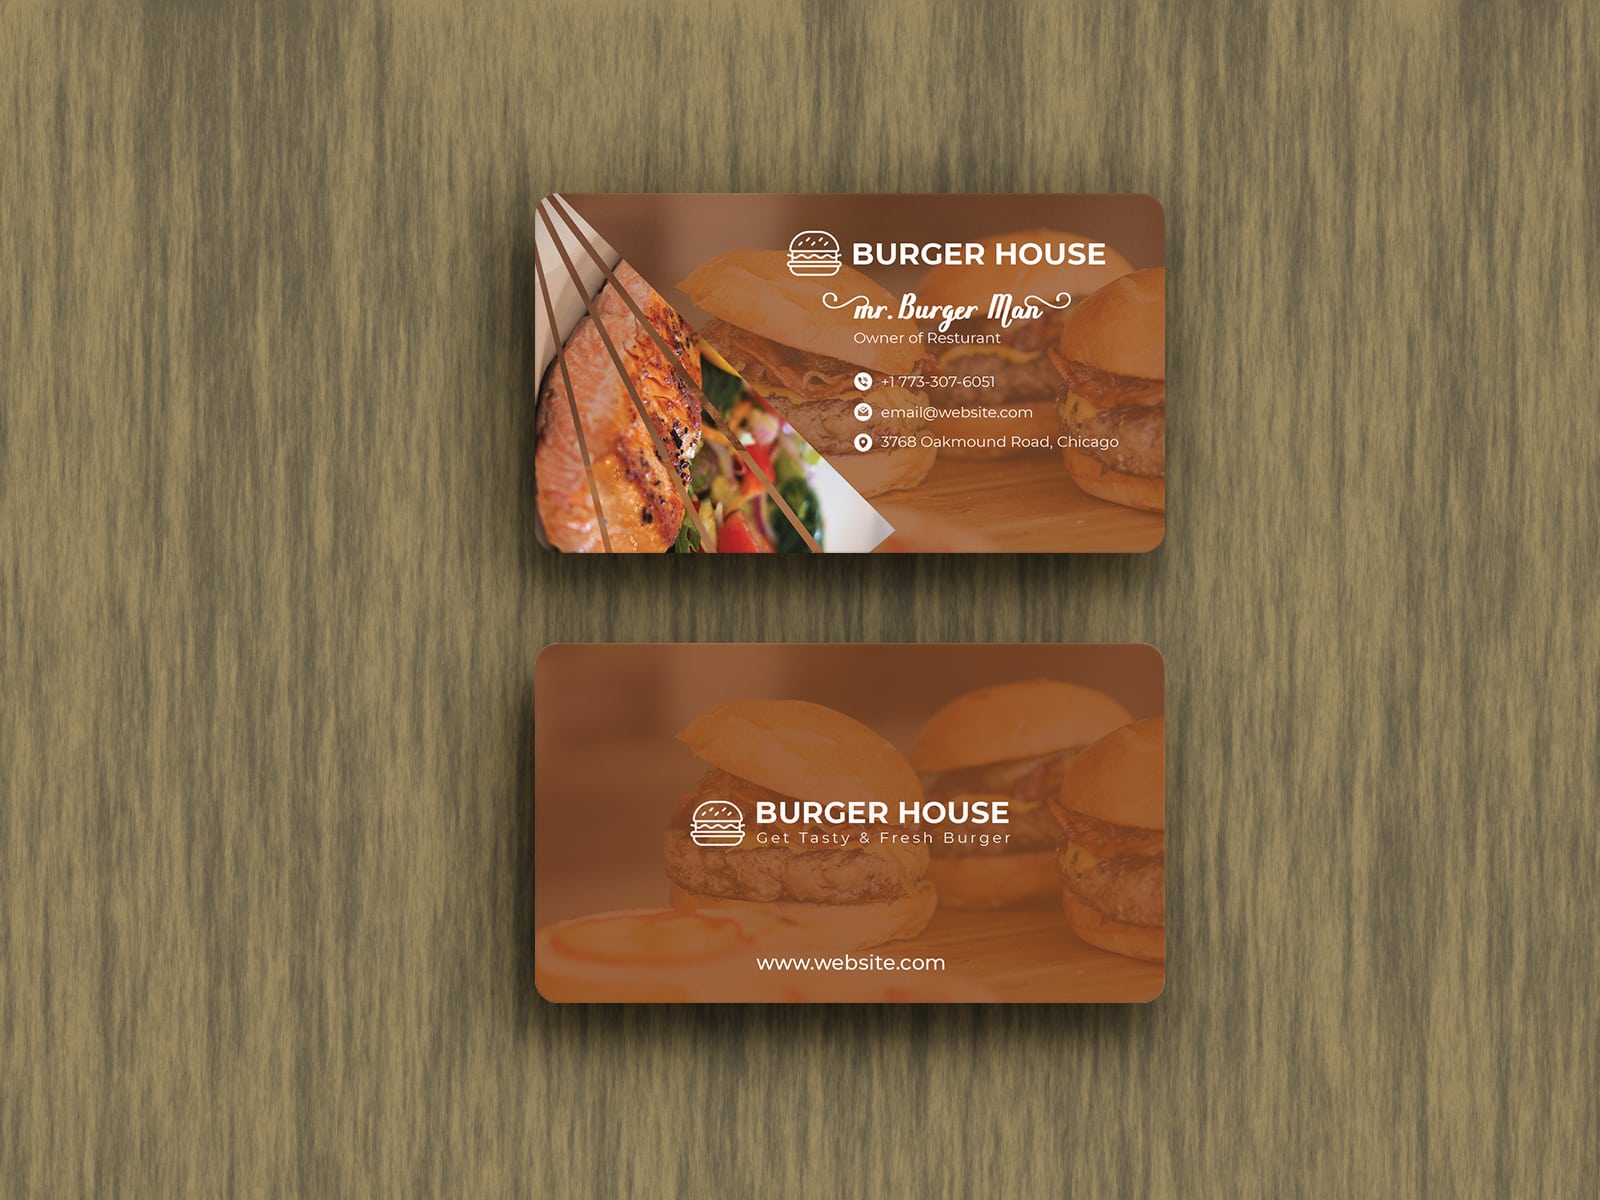 Burger house business card